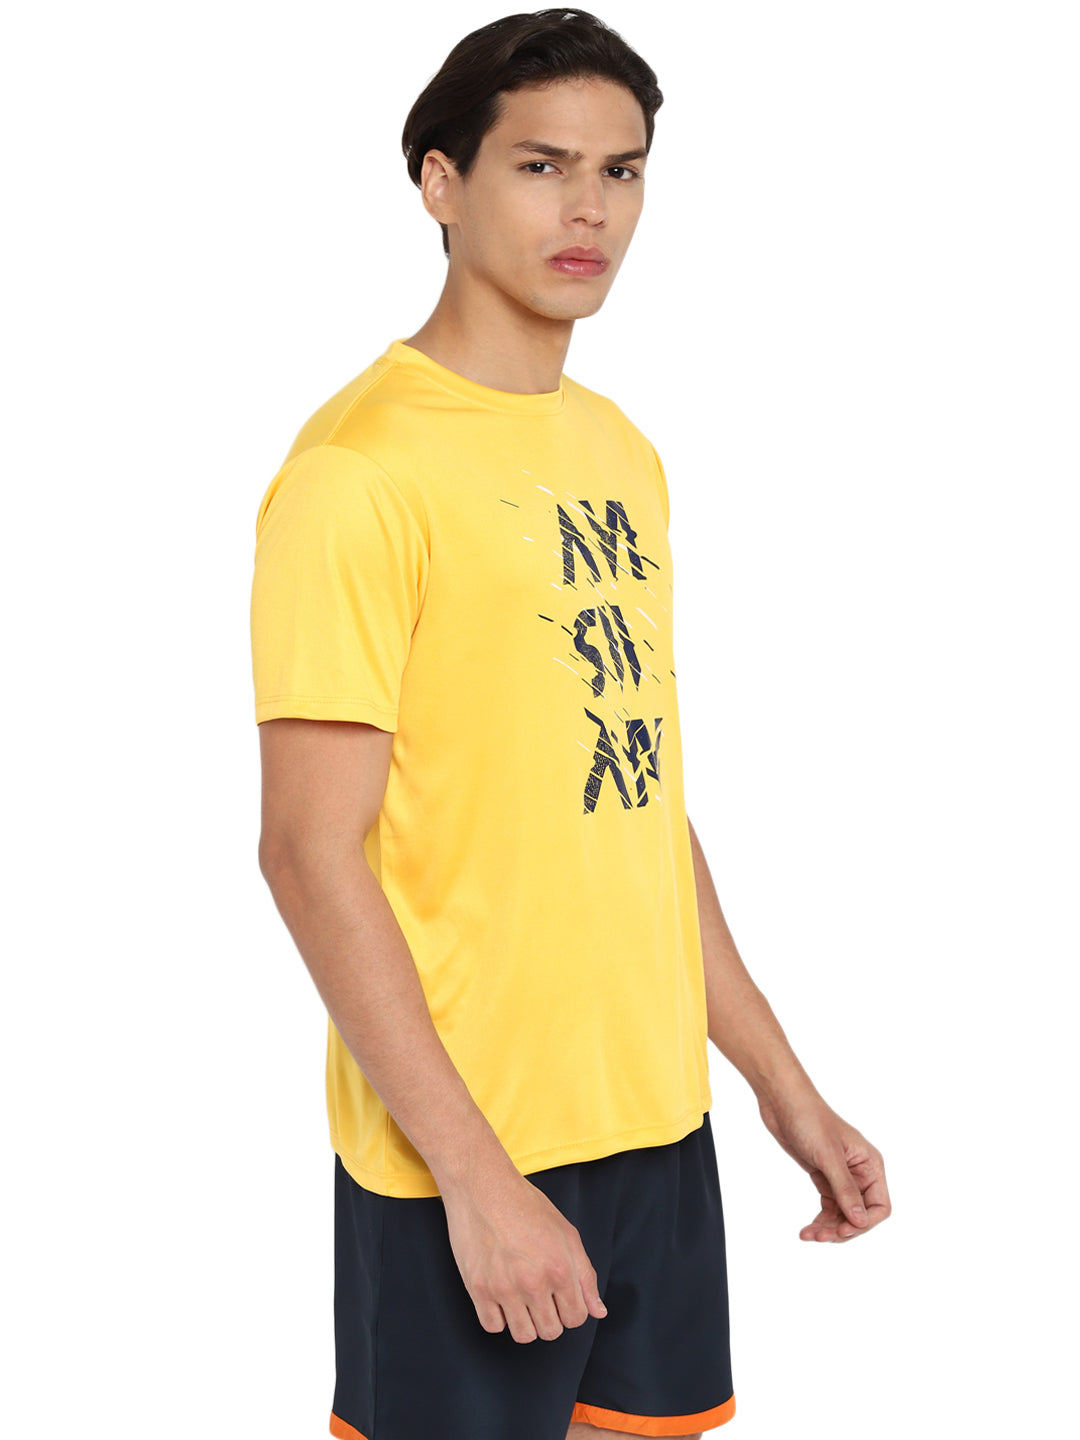 Shop Men awesome printed tshirt Online